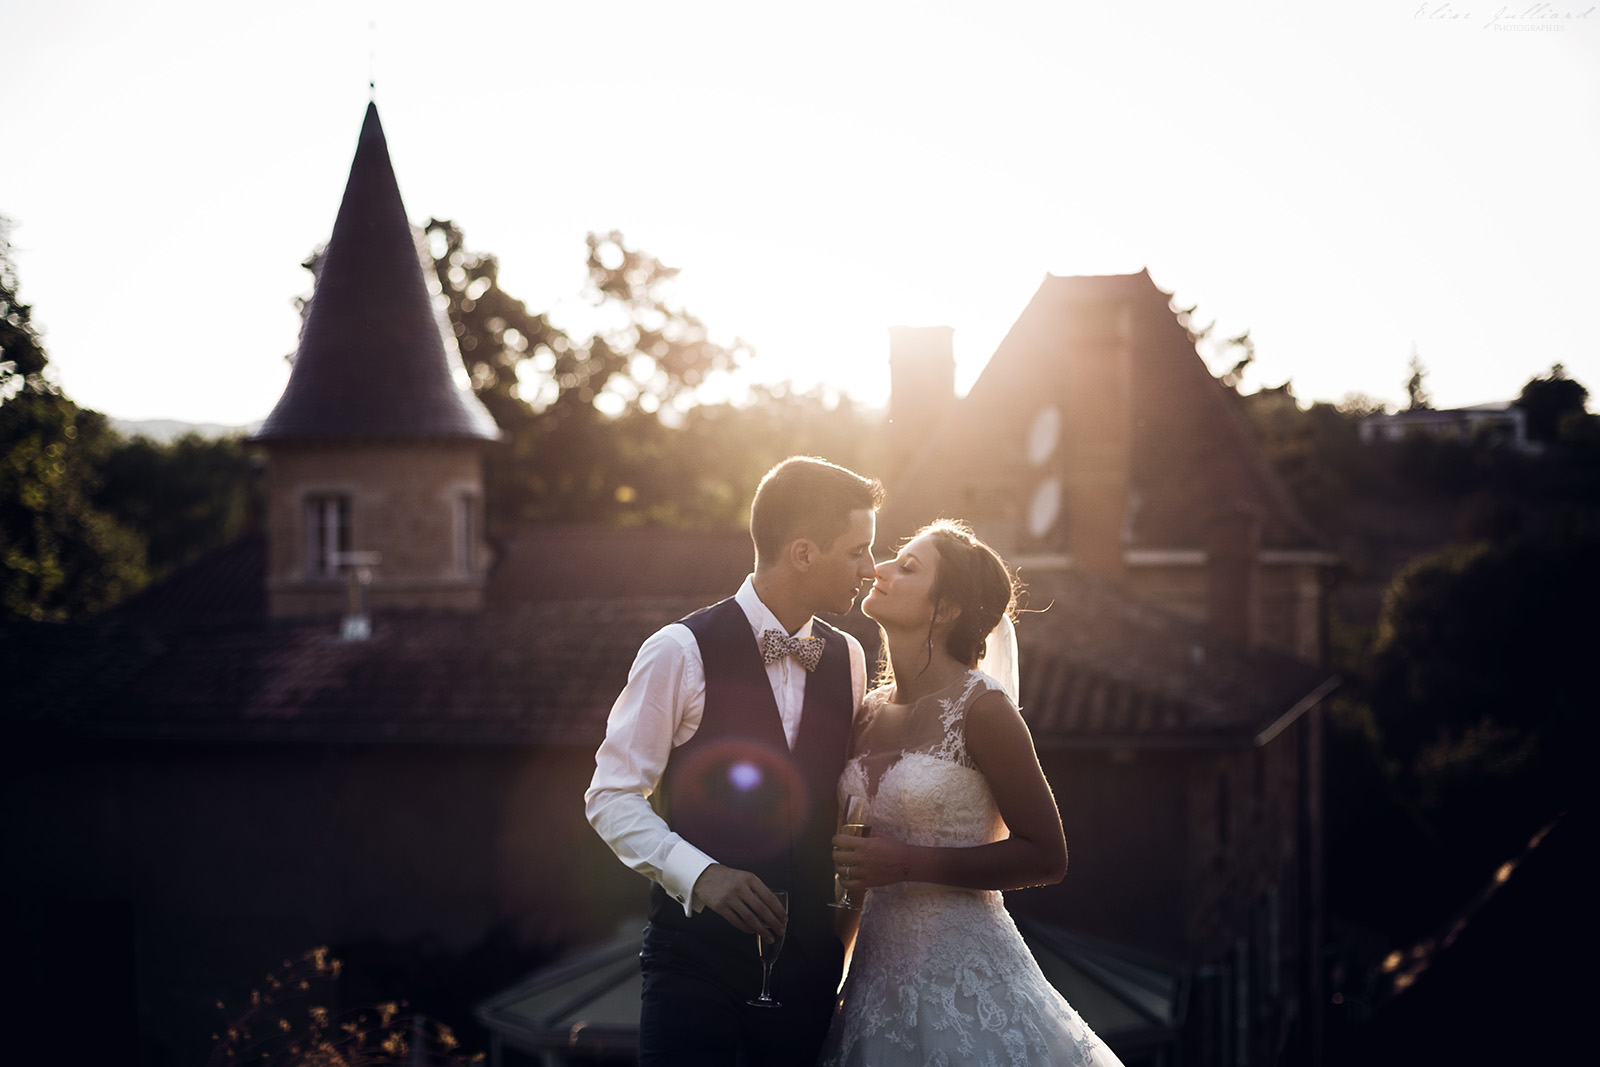 photographe mariage lyon